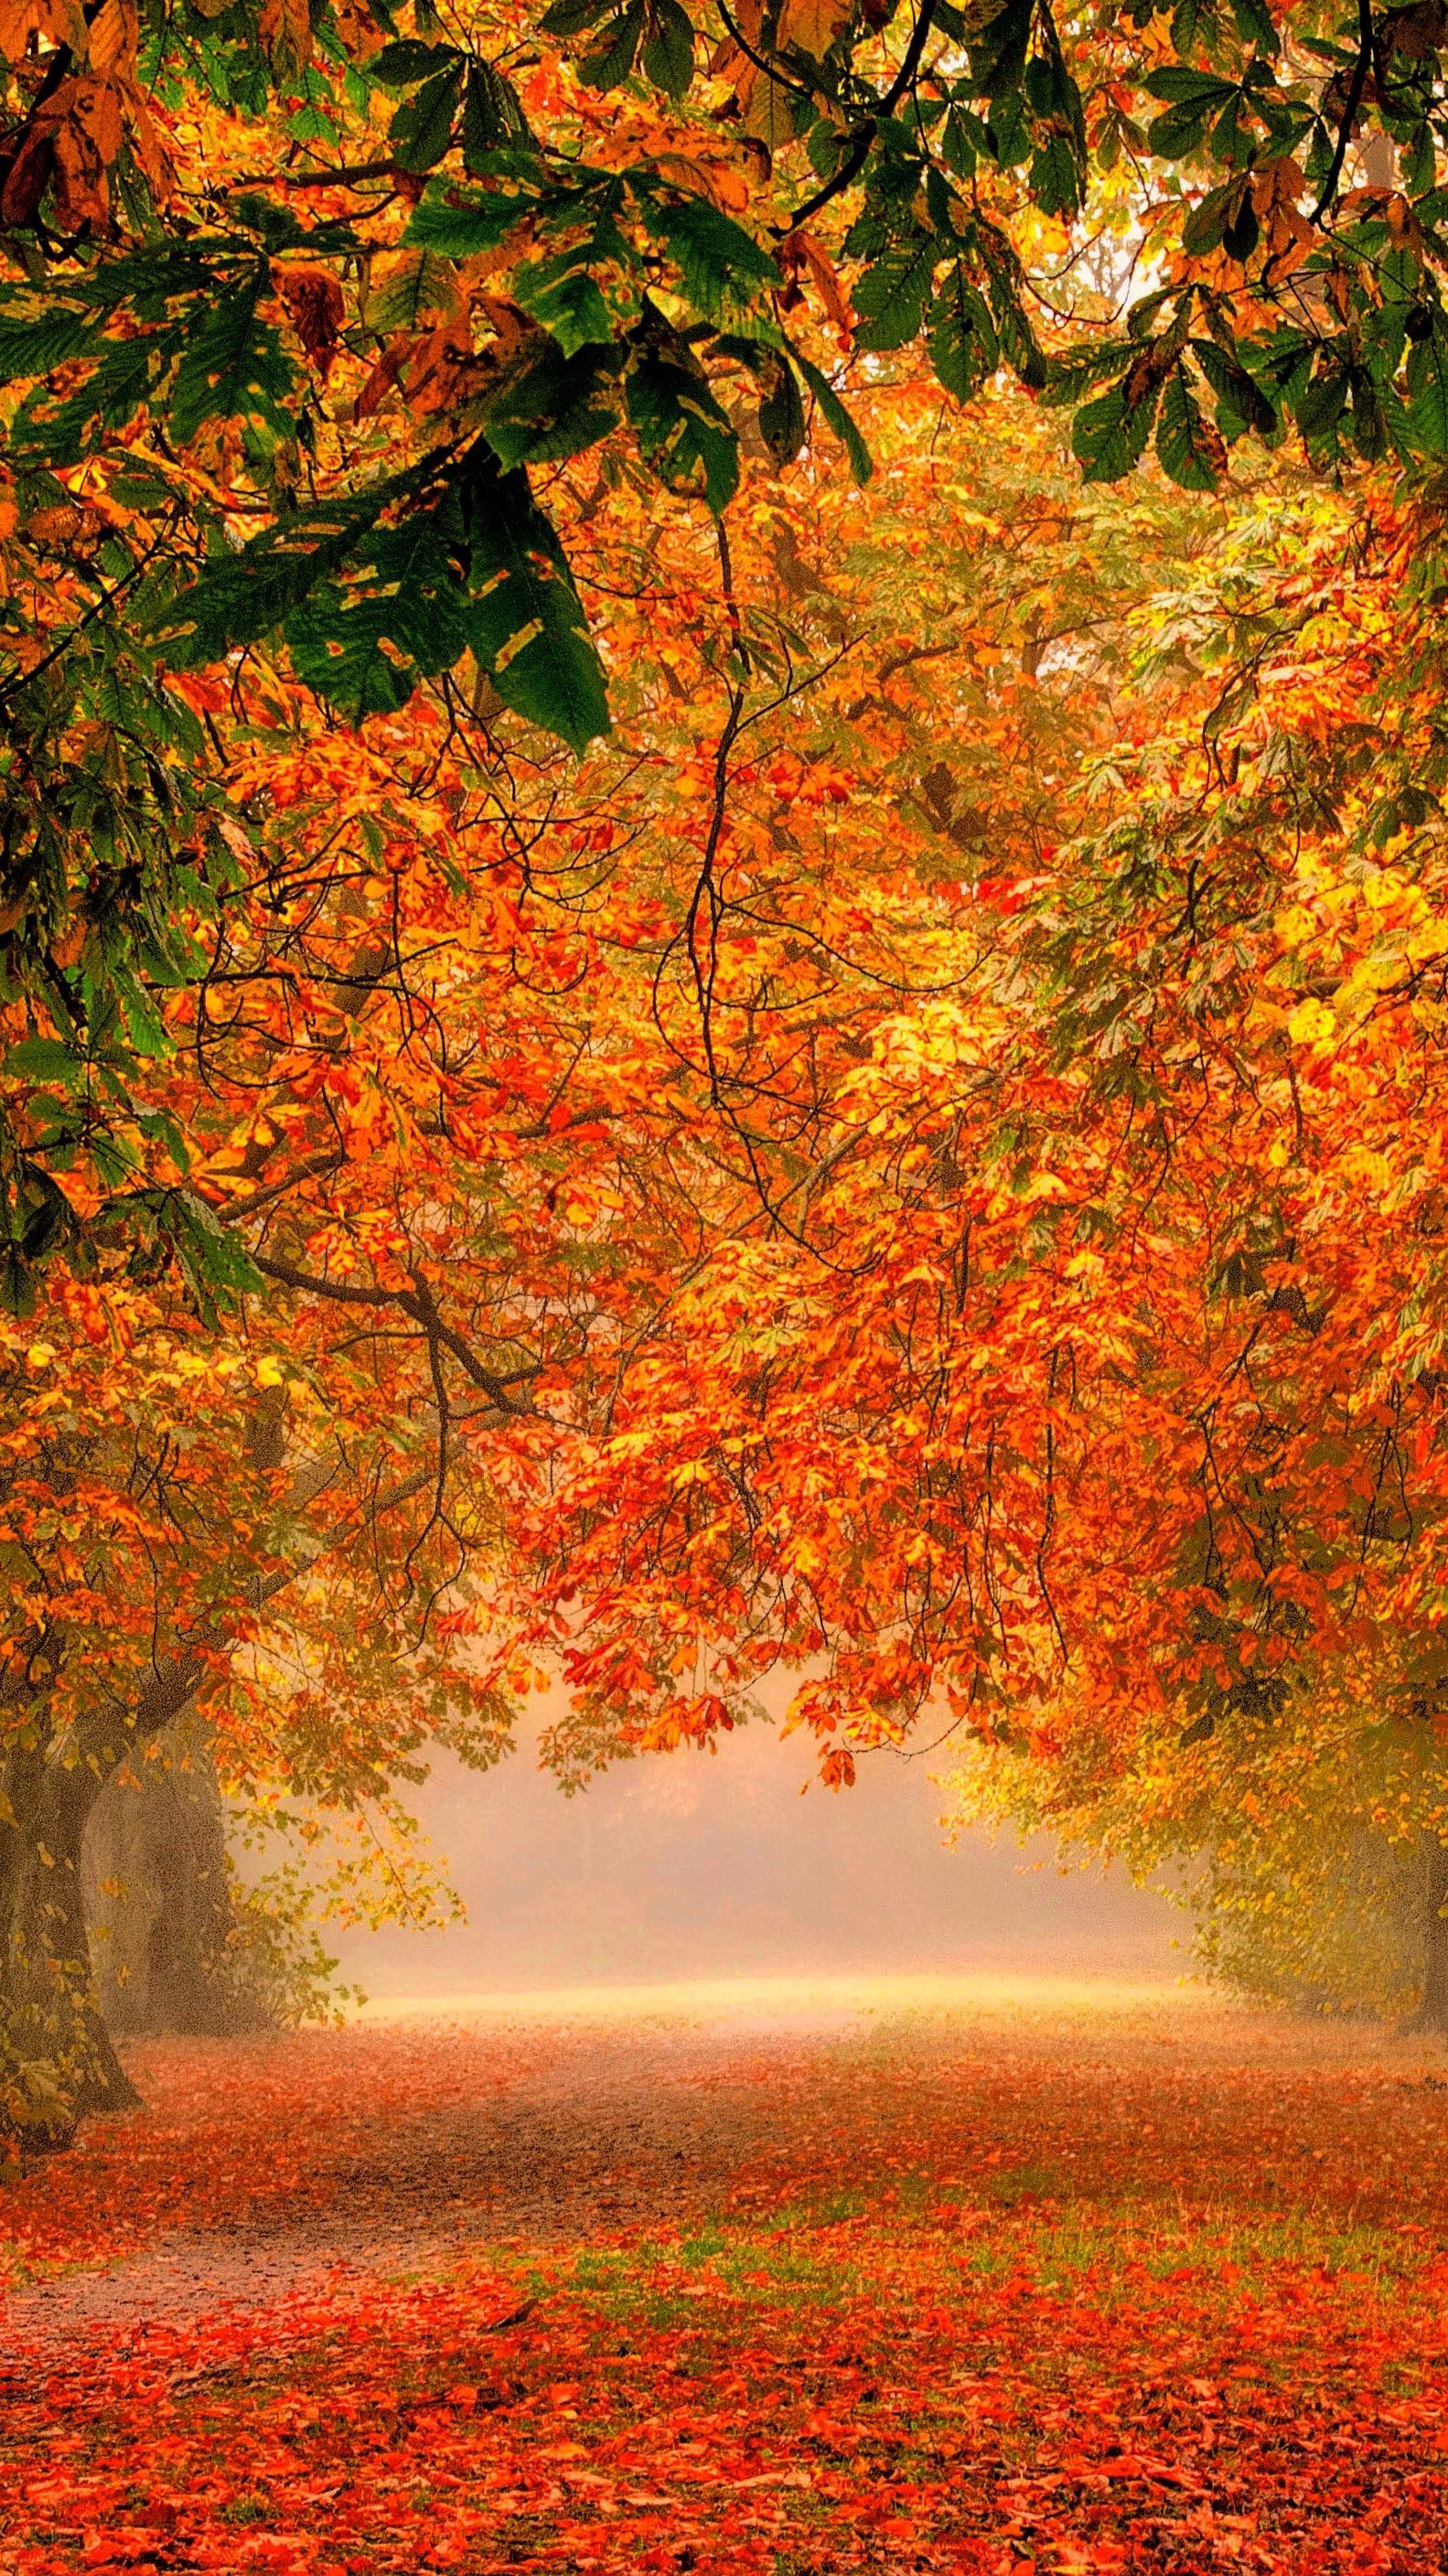 Forest Nature Park Colorful Leaves IPhone Wallpaper. Rainy Wallpaper, Autumn Landscape, Autumn Scenery